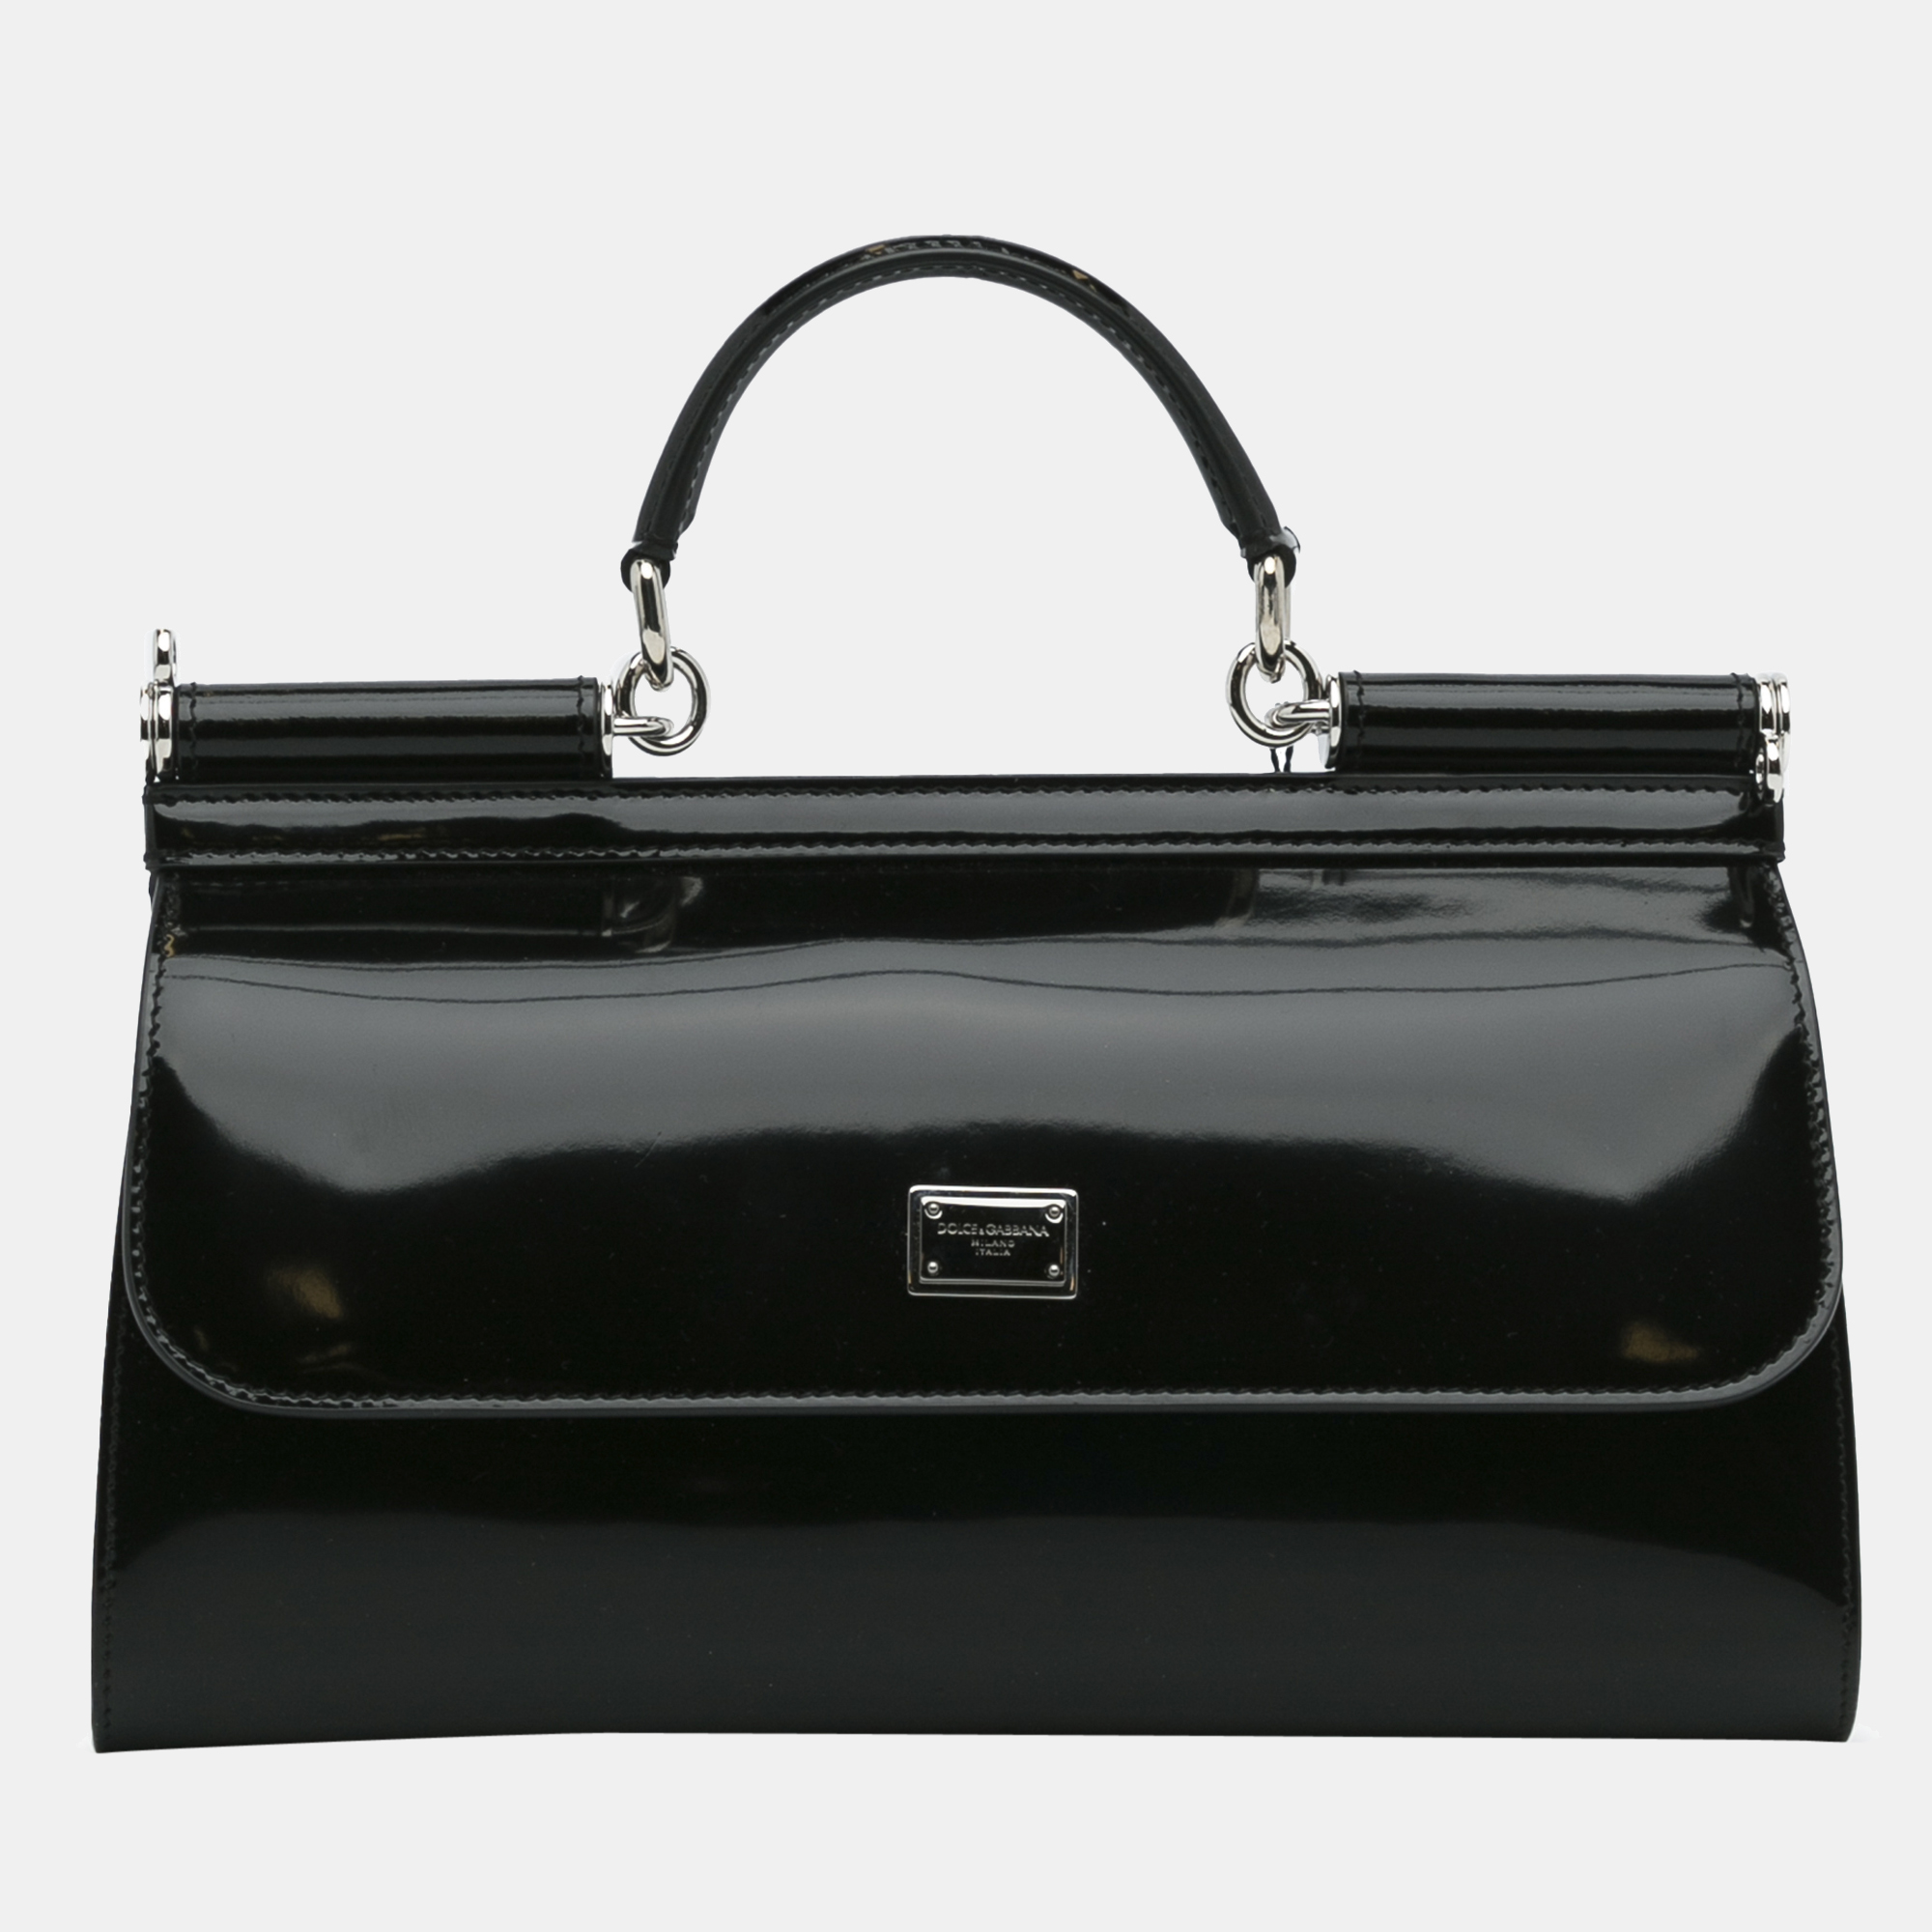 Dolce & gabbana black miss sicily patent leather satchel